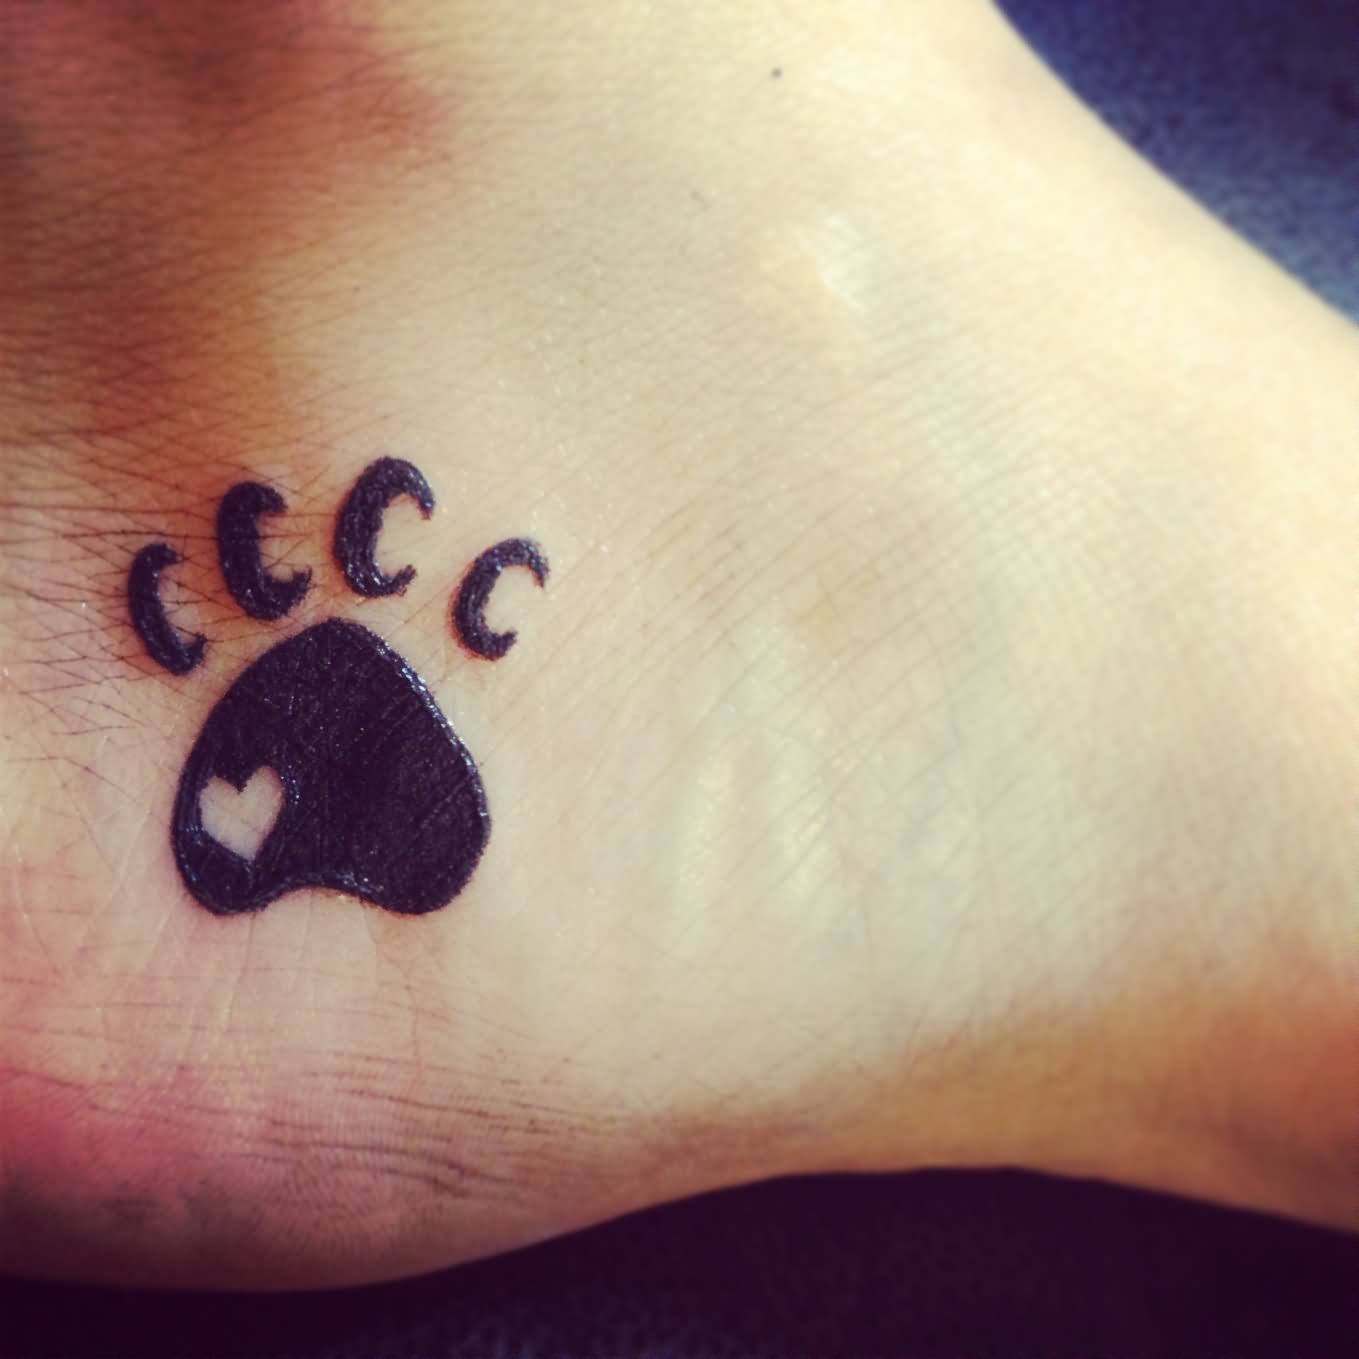 Heart Shape In Paw Print Tattoo On Heel